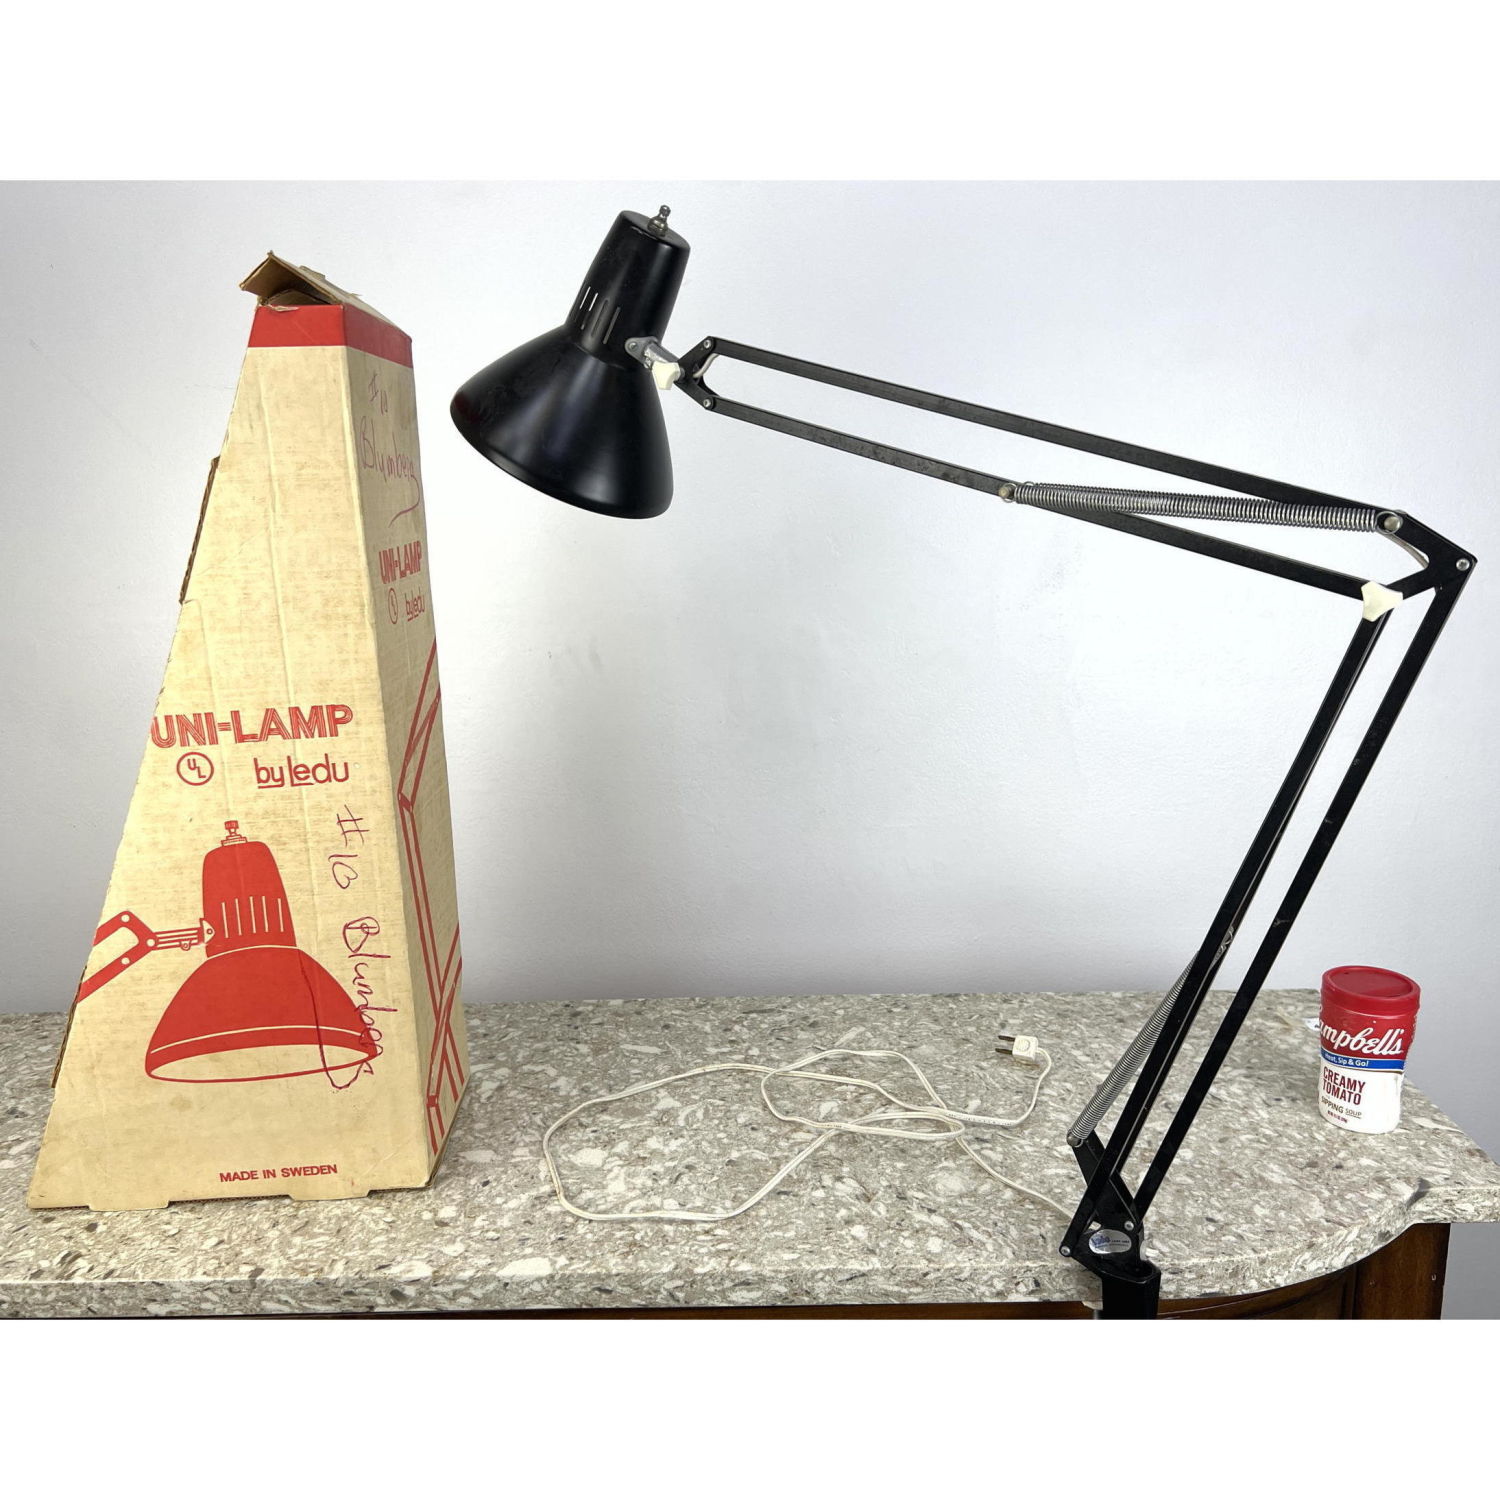 UNI LAMP by LEDU Adjustable Clamp 2b95e8